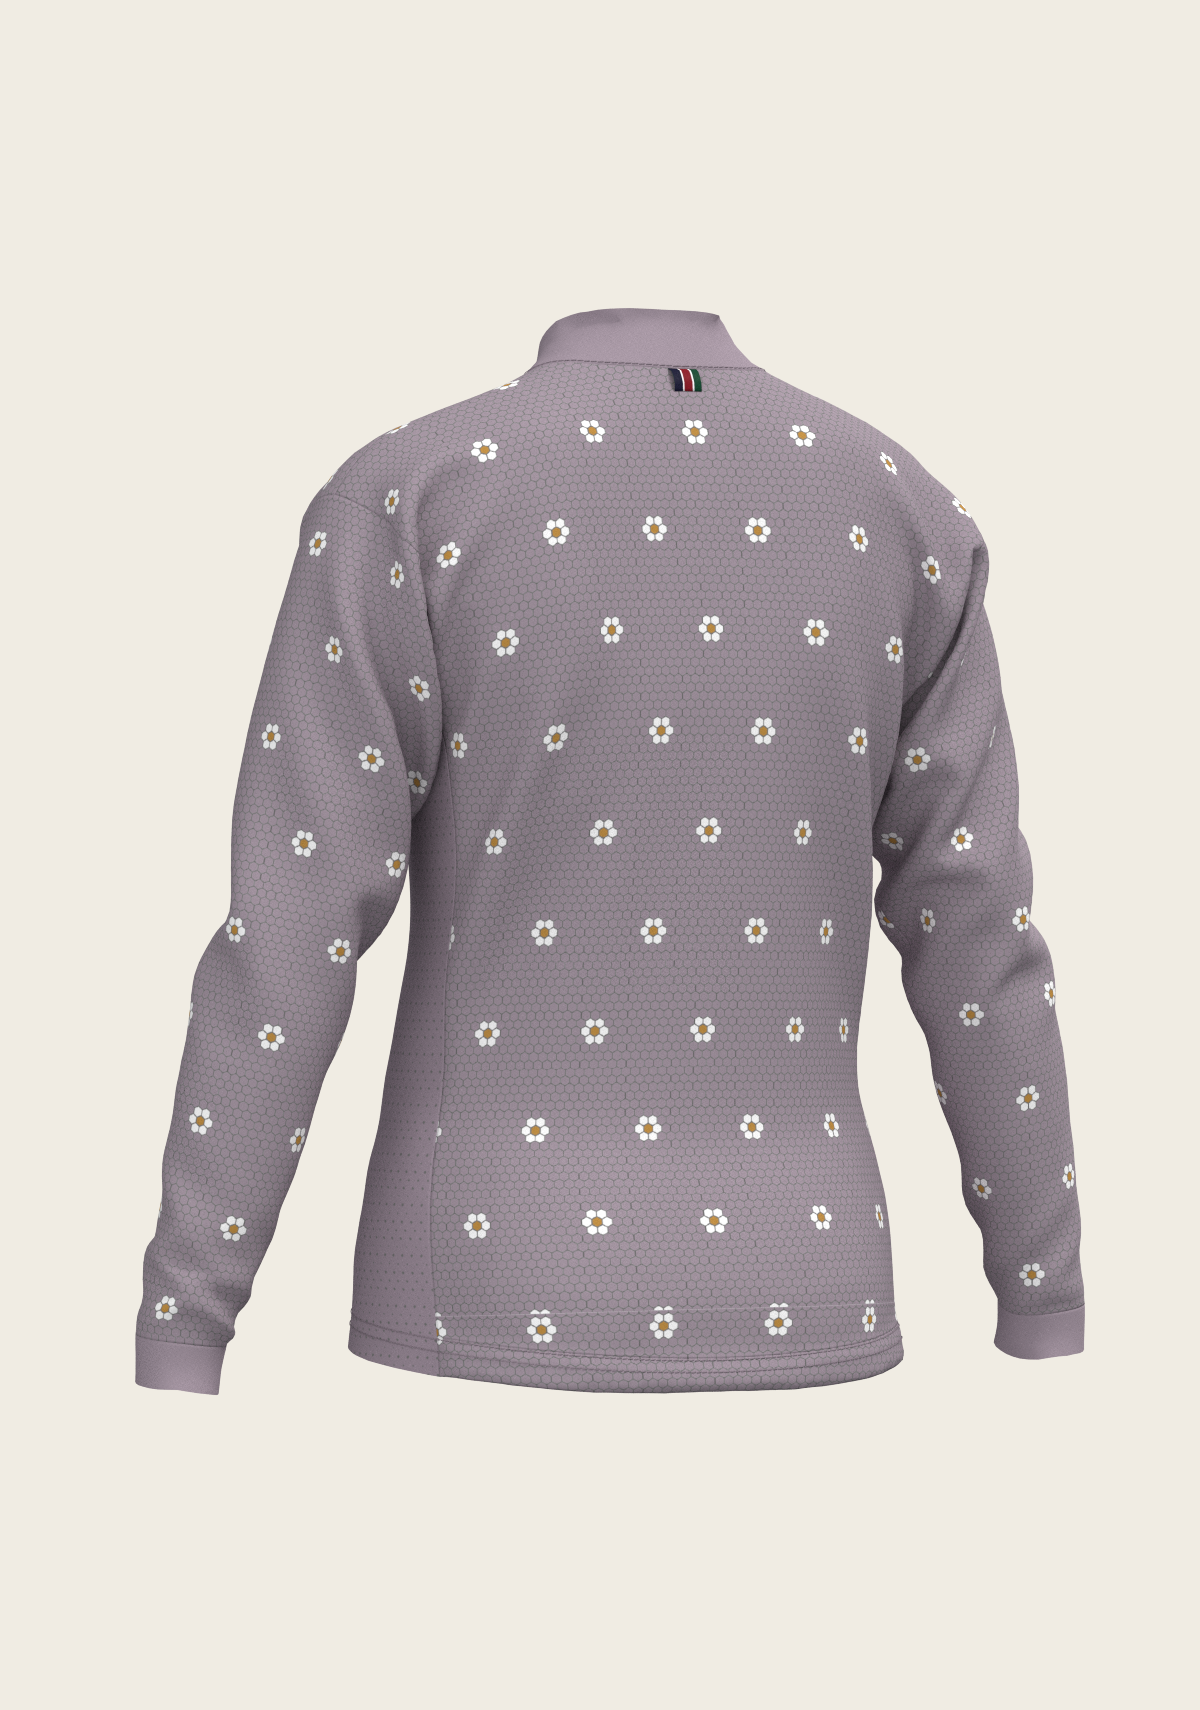 Mosaic Daises in Lavender Children's Long Sleeve Shirt